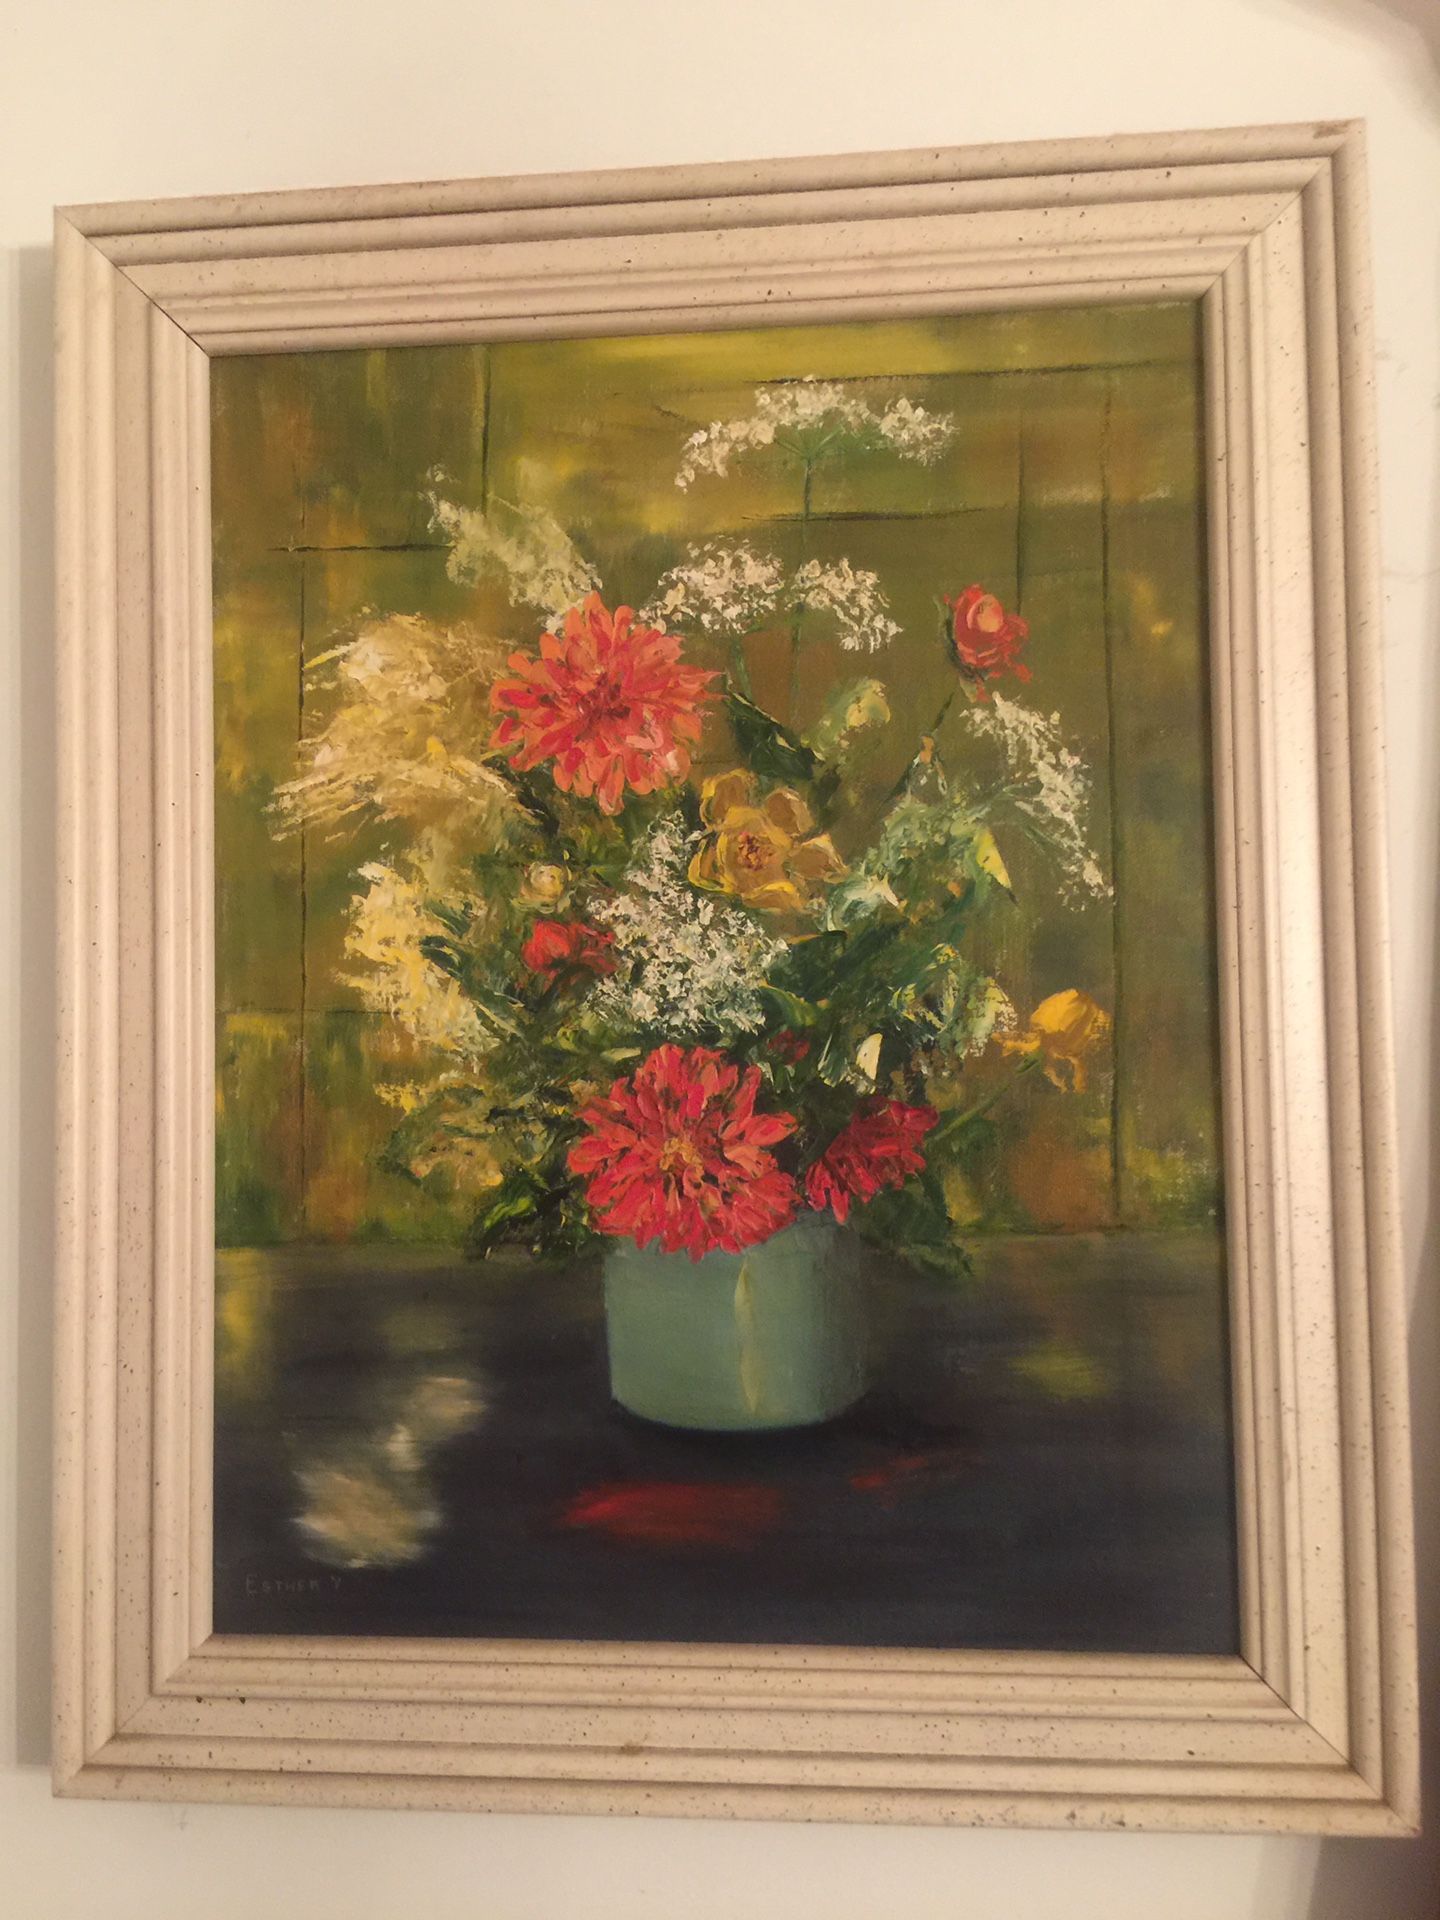 Flower vase painting on canvas